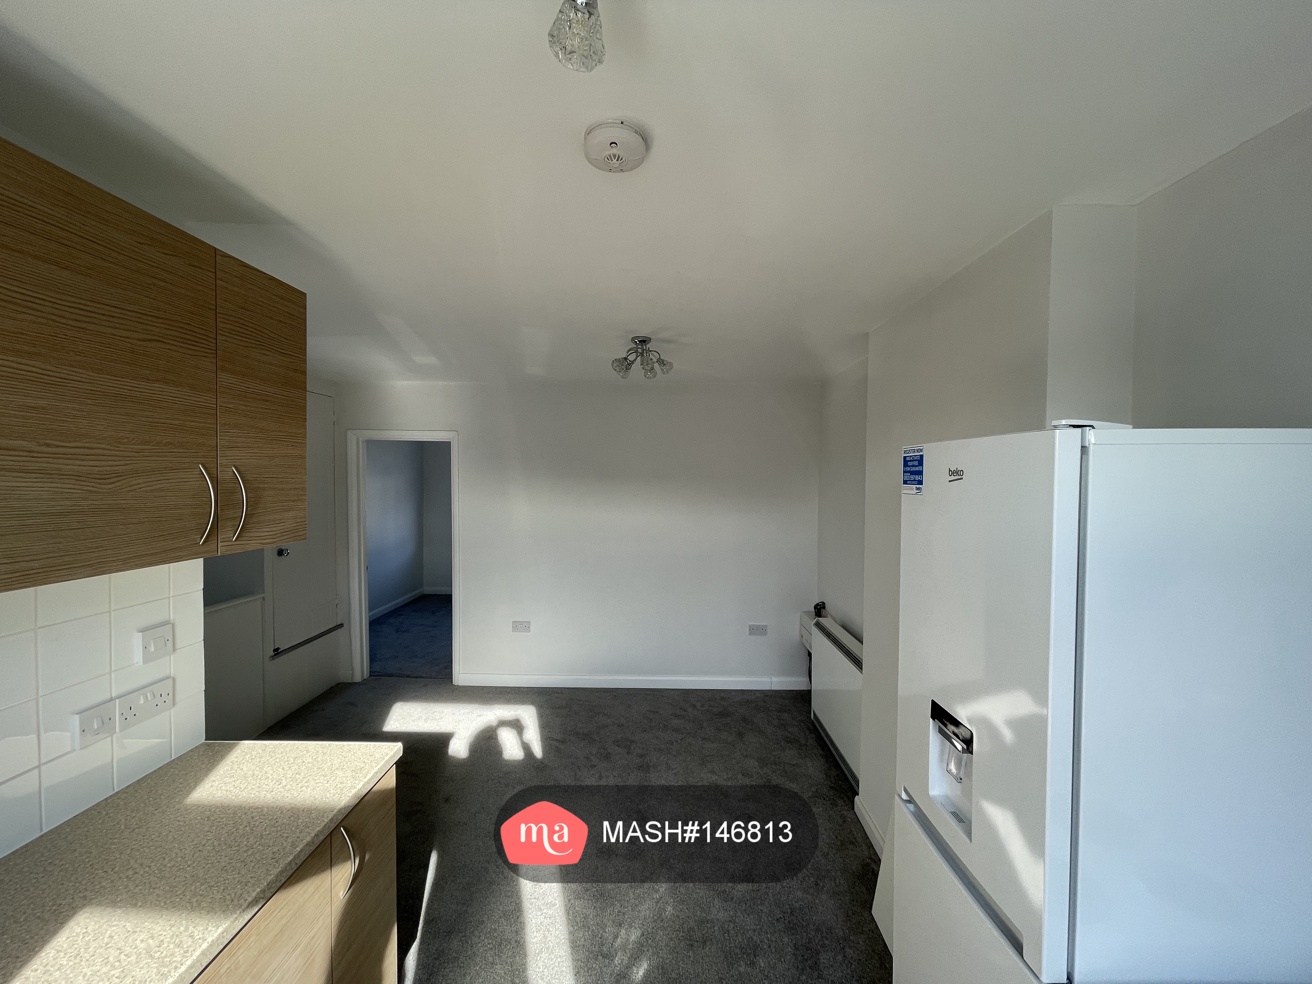 1 Bedroom Flat to rent in St albans - Mashroom